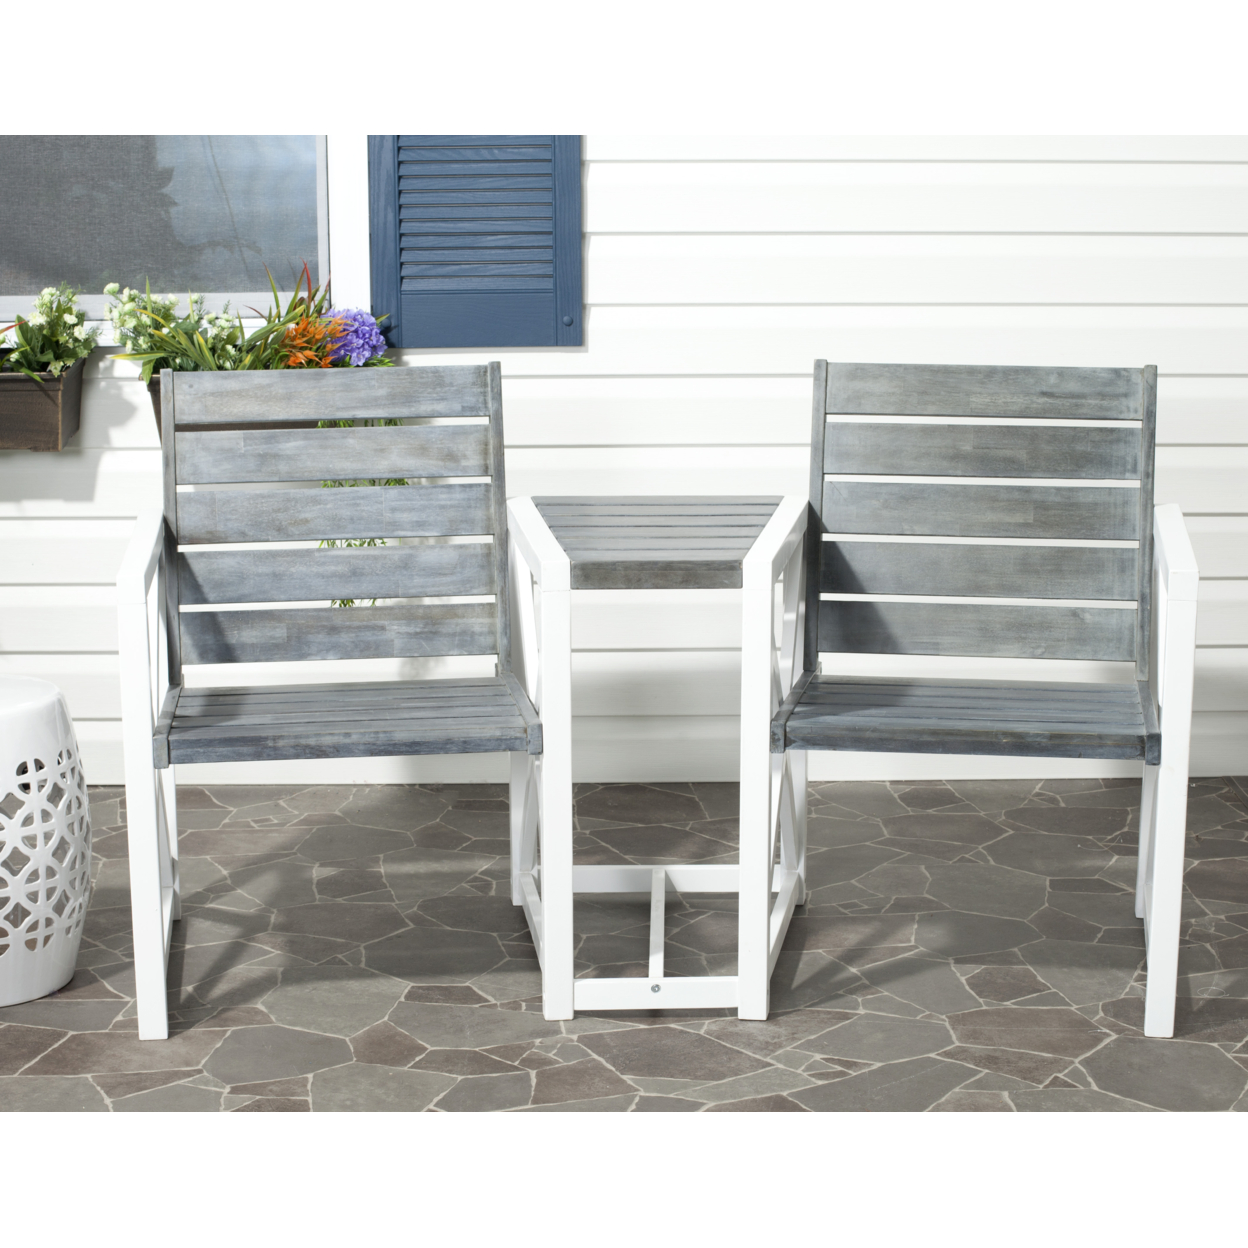 SAFAVIEH Outdoor Collection Jovanna 2-Seat Bench White/Ash Grey